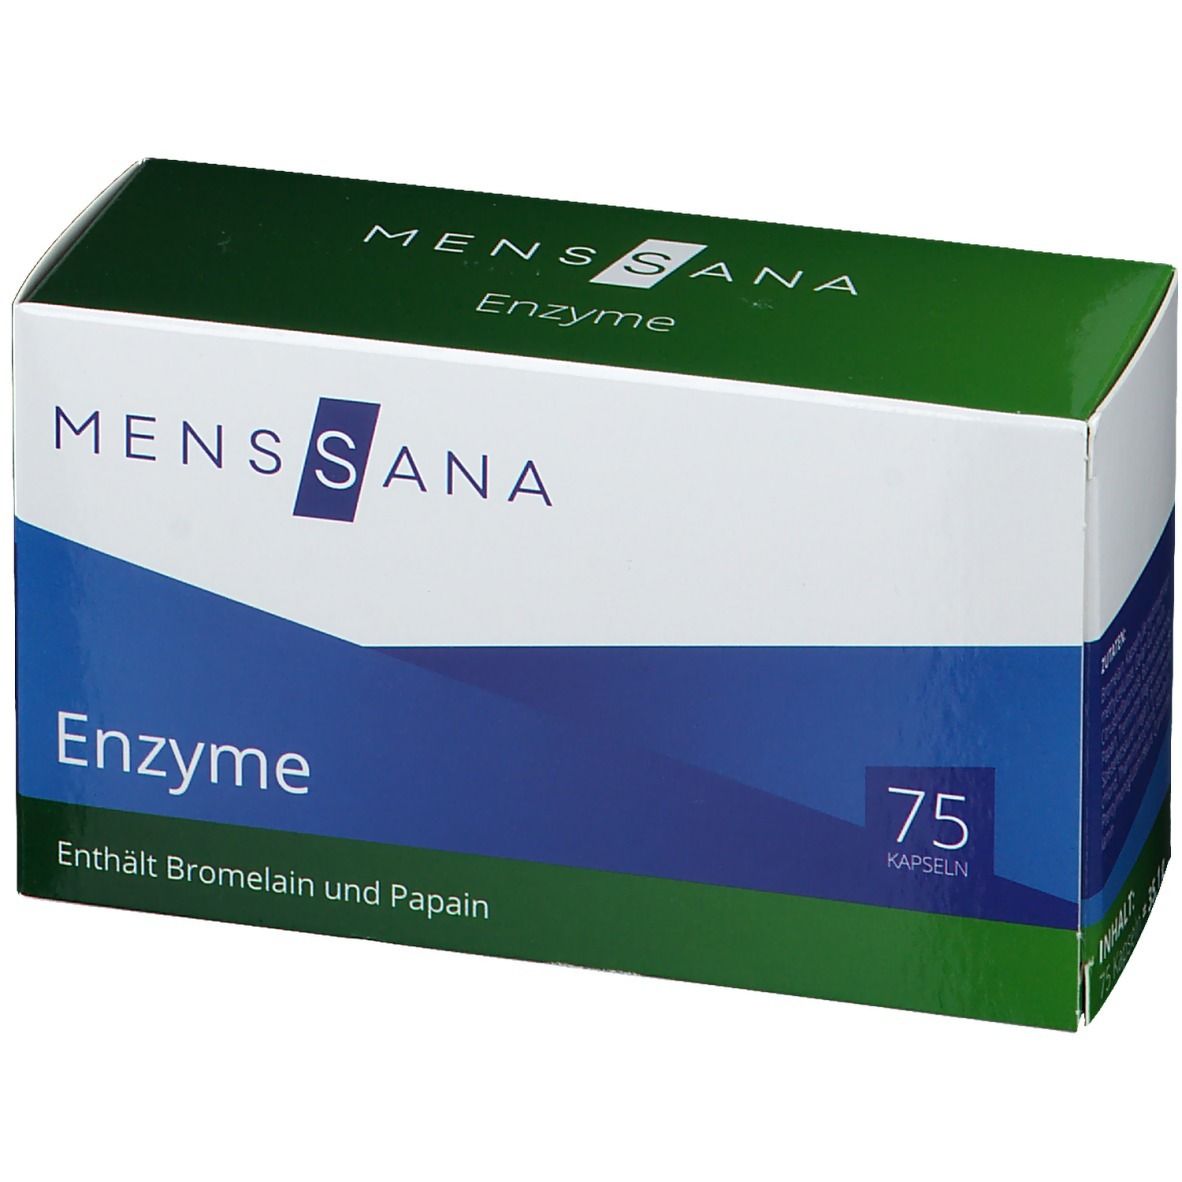 MENSSANA Enzyme